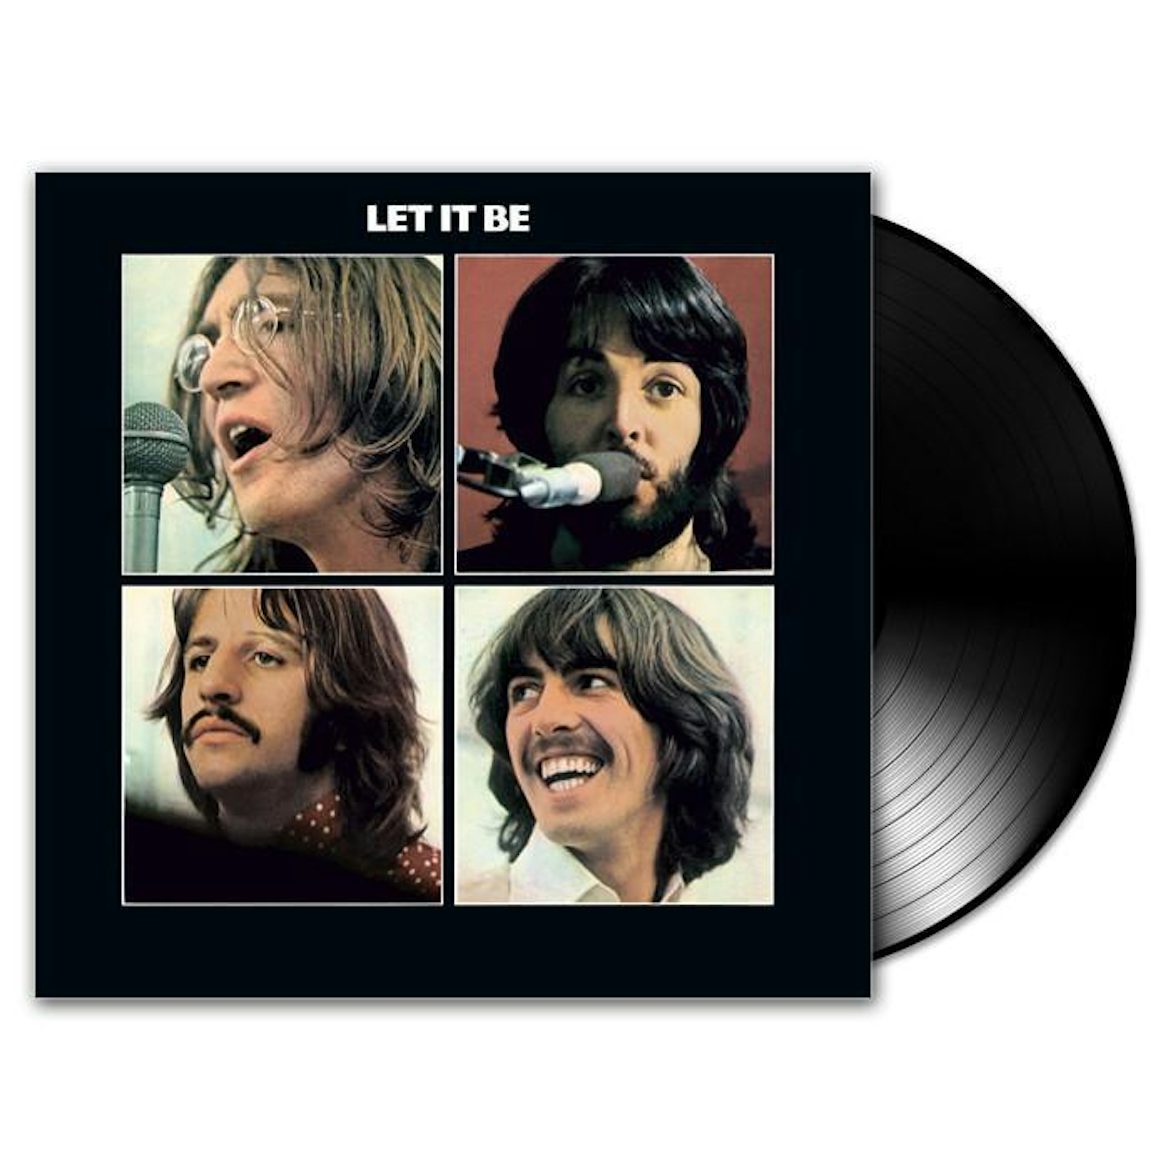 Песня лет ит би. The Beatles Let it be обложка. Обложка альбома Битлз Let it be. LP Beatles, the: Let it be. The Beatles Let it be пластинка.